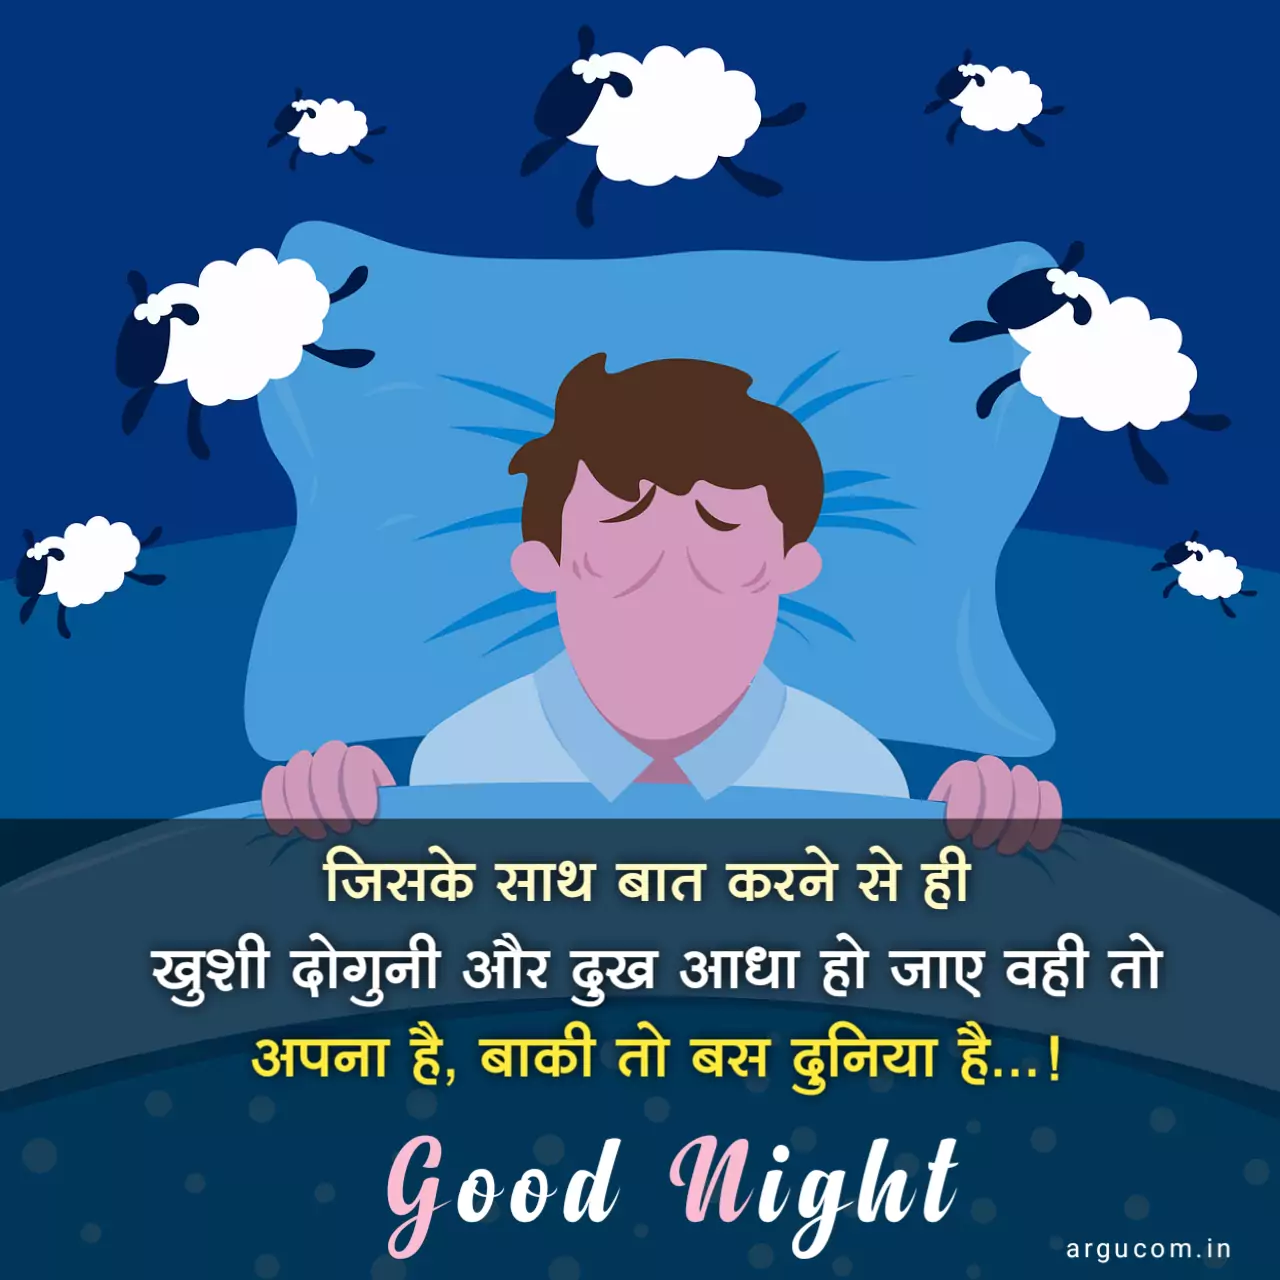 Good night quotes in hindi, शुभ रात्रि कोट्स हिंदी